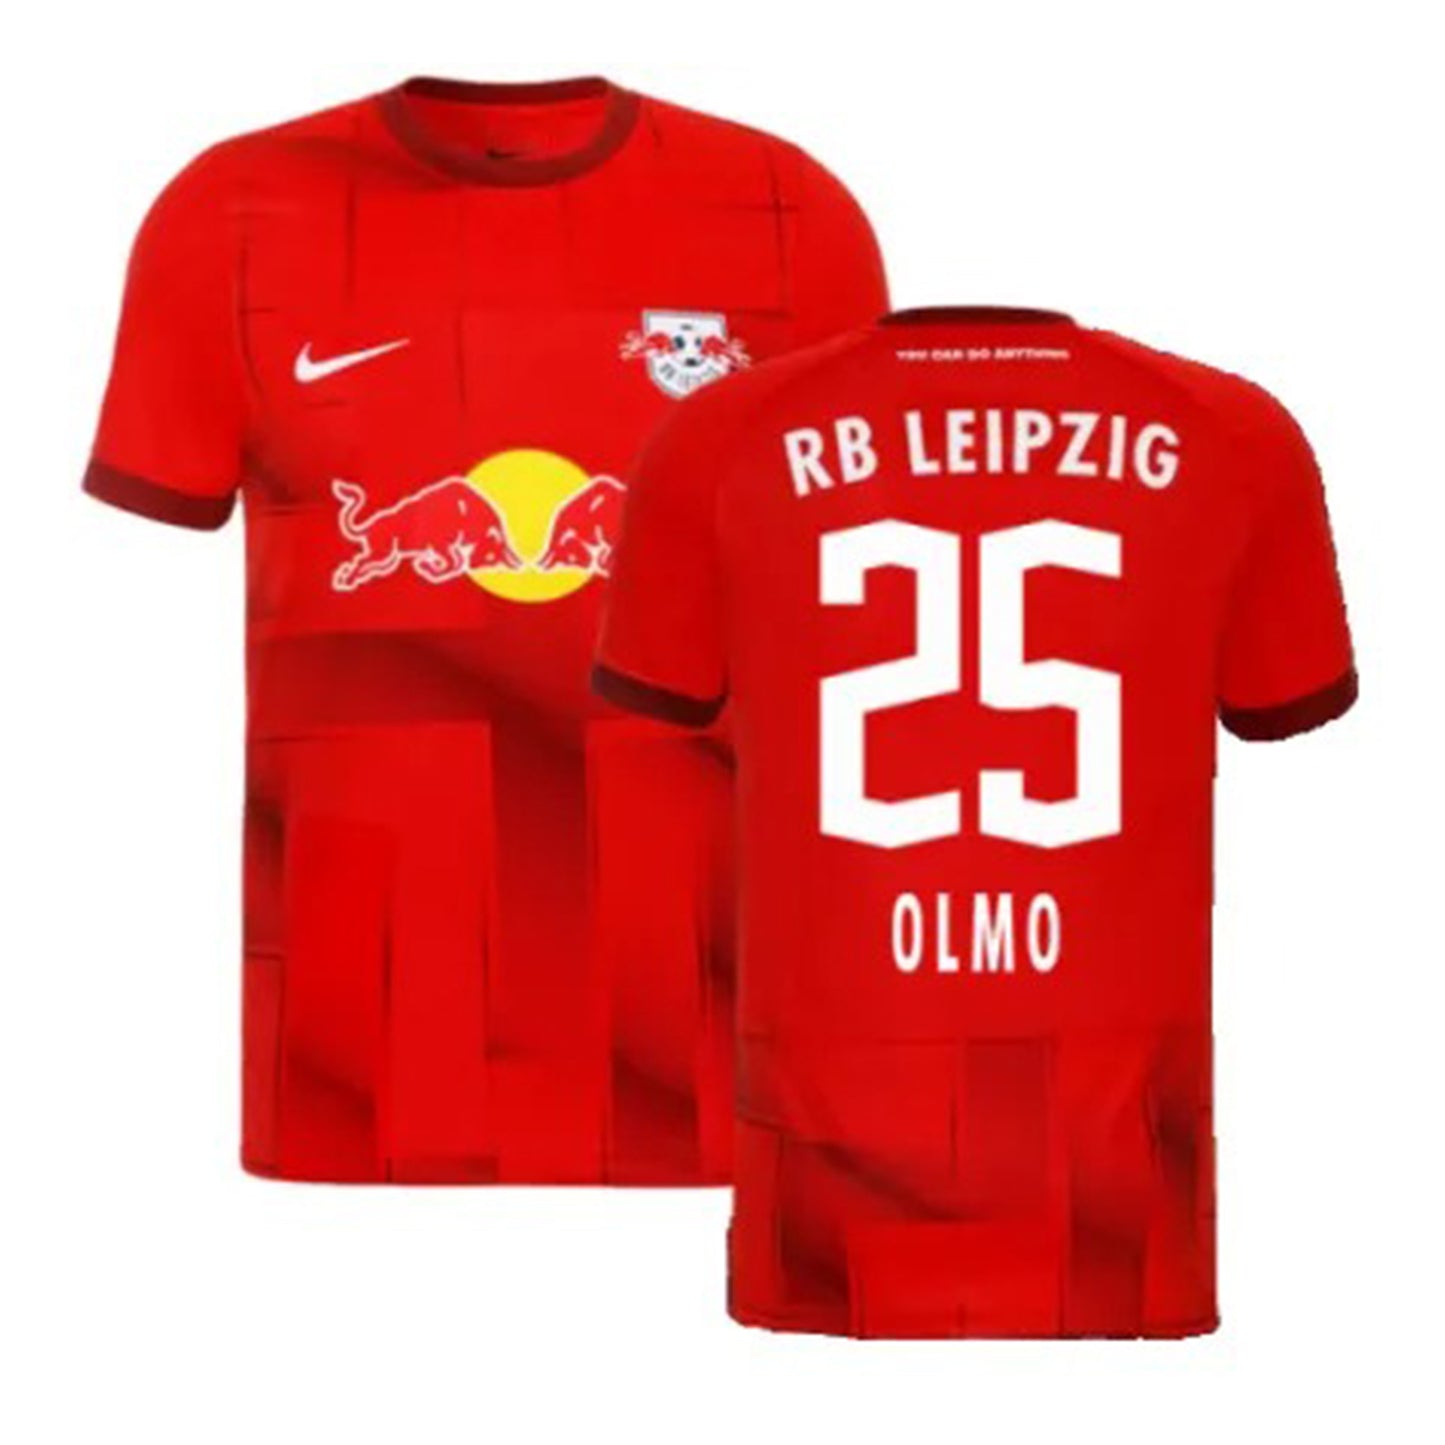 Dani Olmo RB Leipzig 7 Jersey